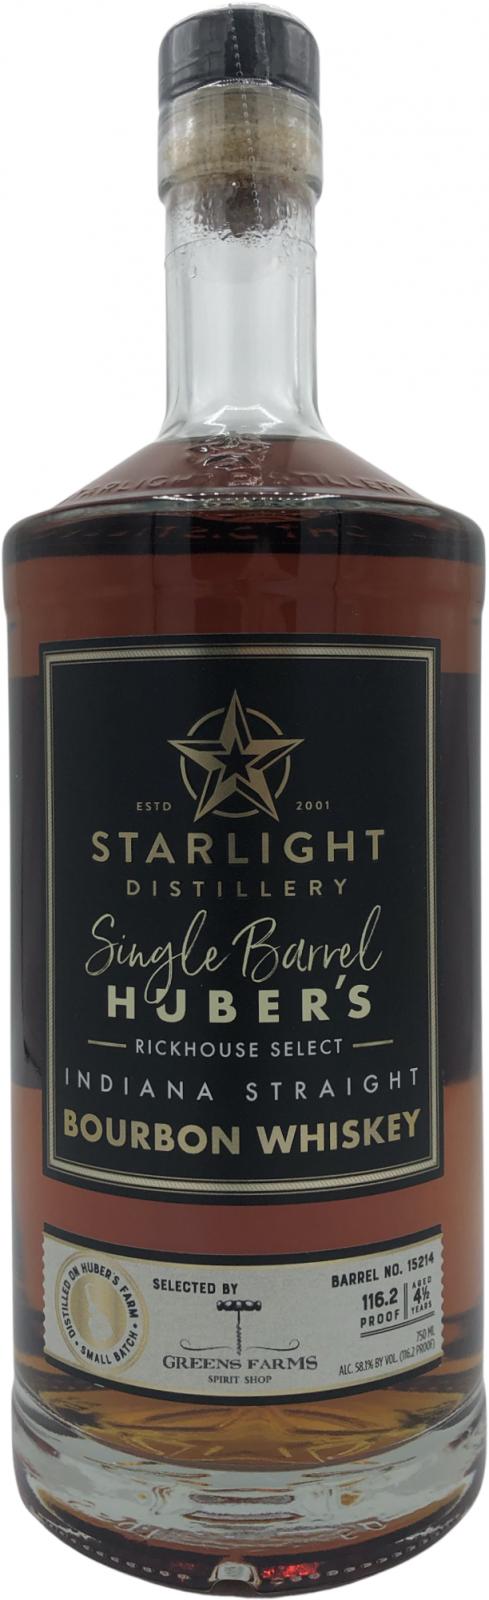 Starlight Distillery 4yo #15214 Greens Farms Spirit Shop 58.1% 750ml